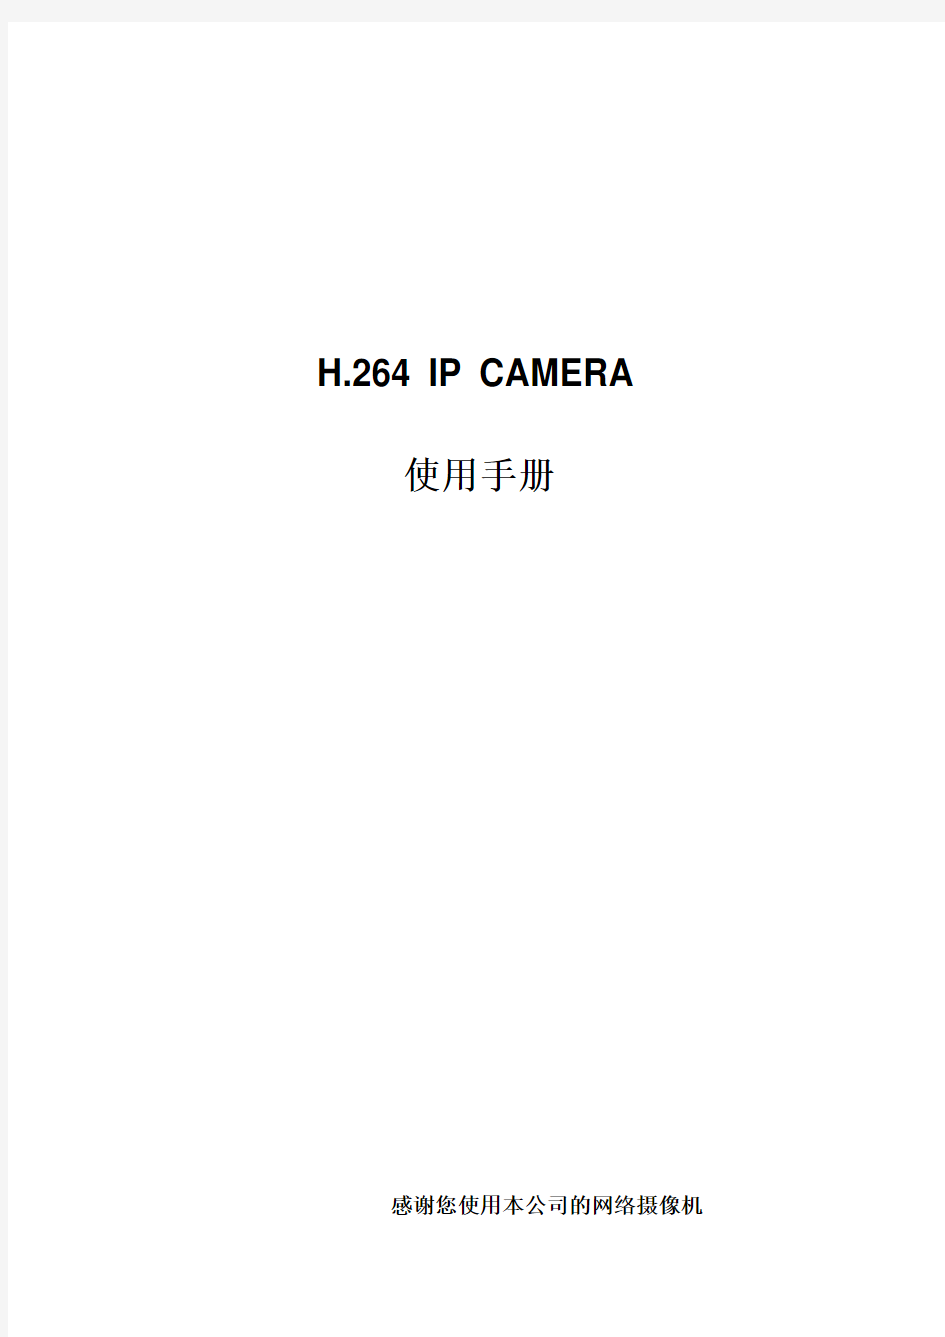 H.264网络摄像机说明书